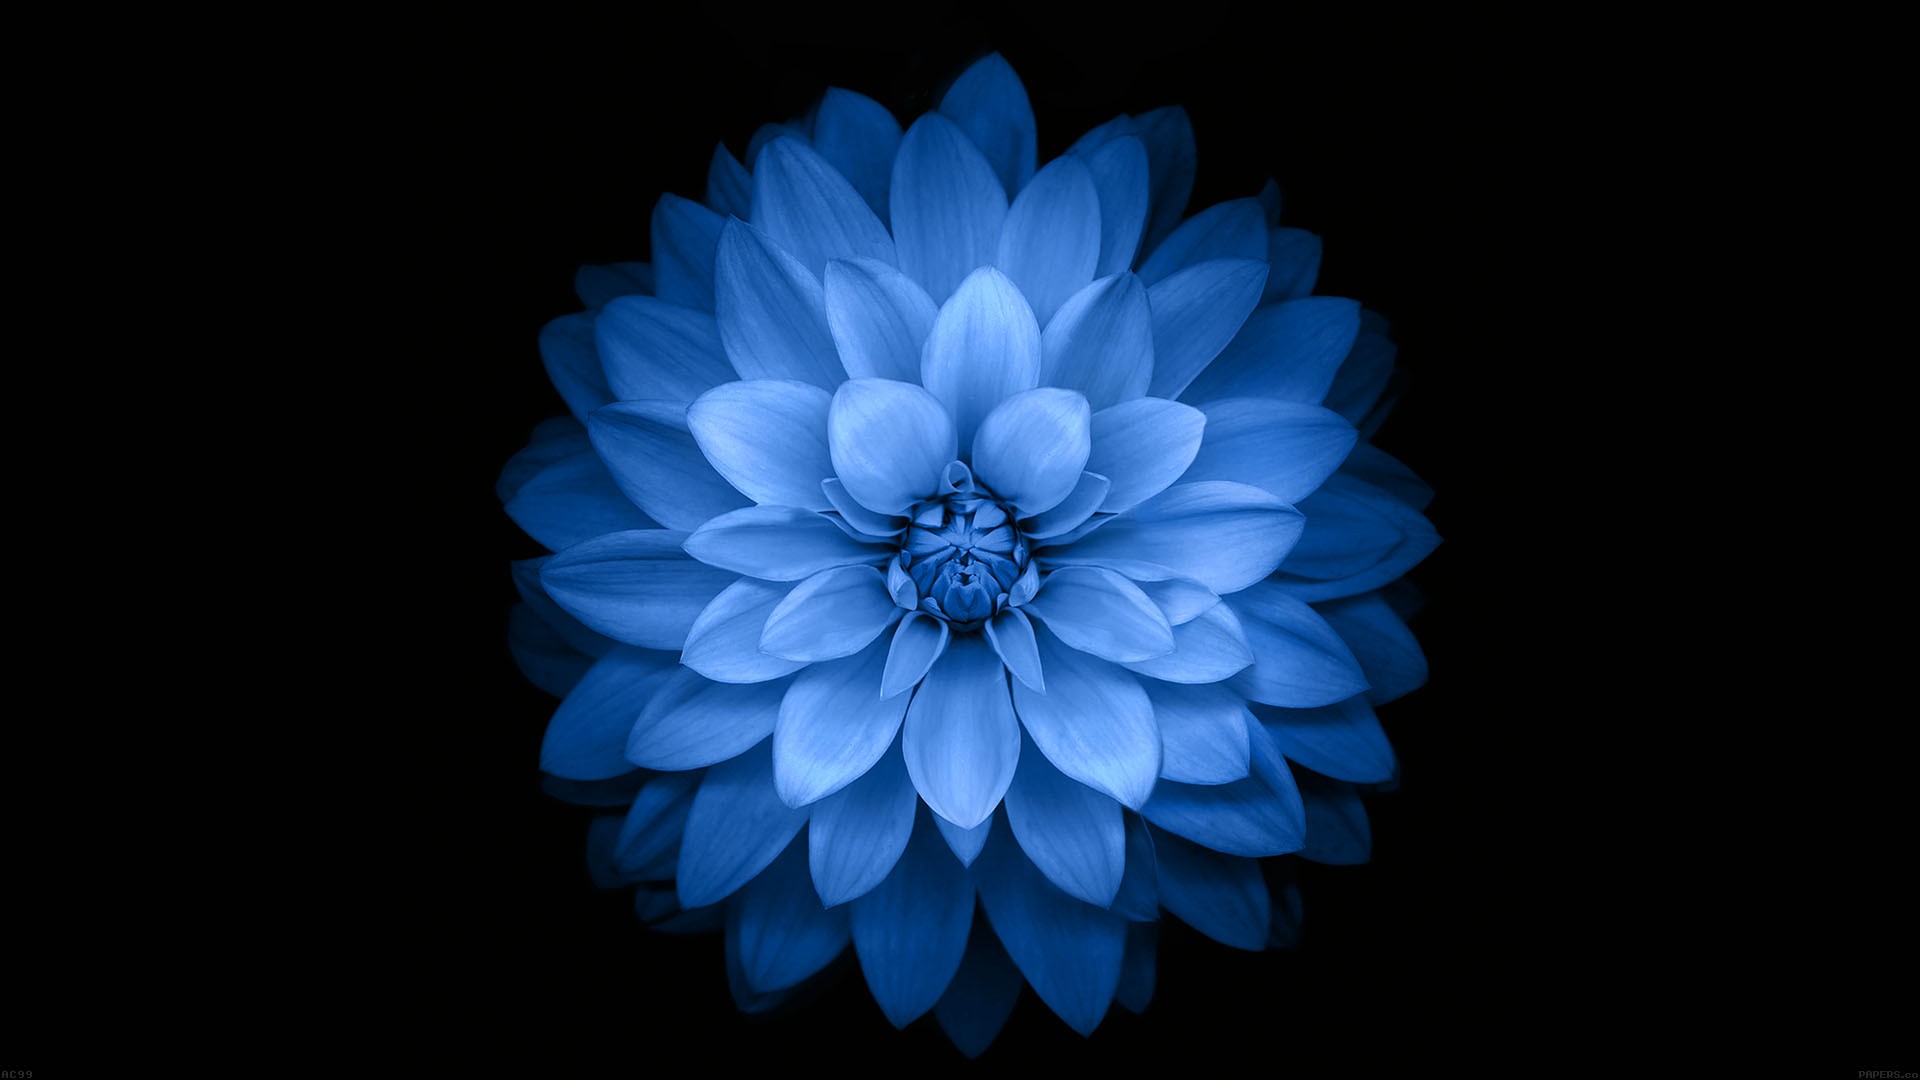 General 1920x1080 flowers black simple background minimalism blue flowers blue black background plants